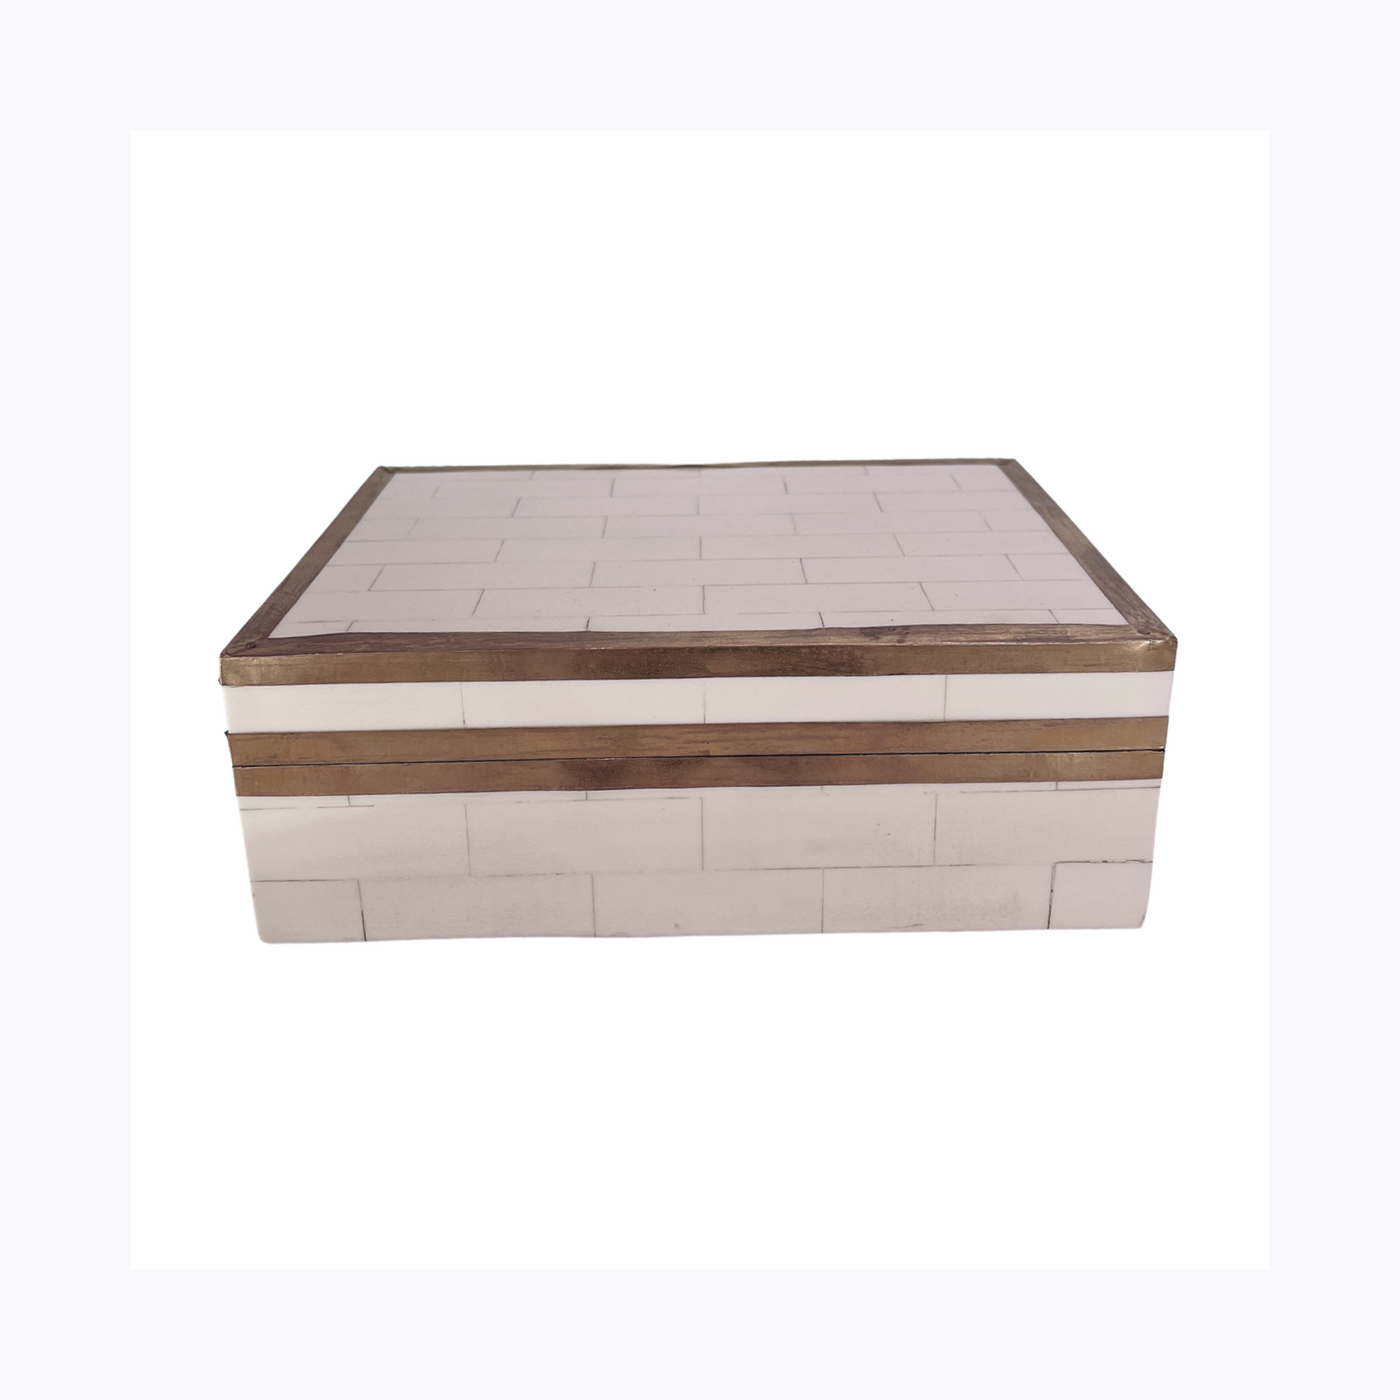 Cream Tiled Decor Box Small